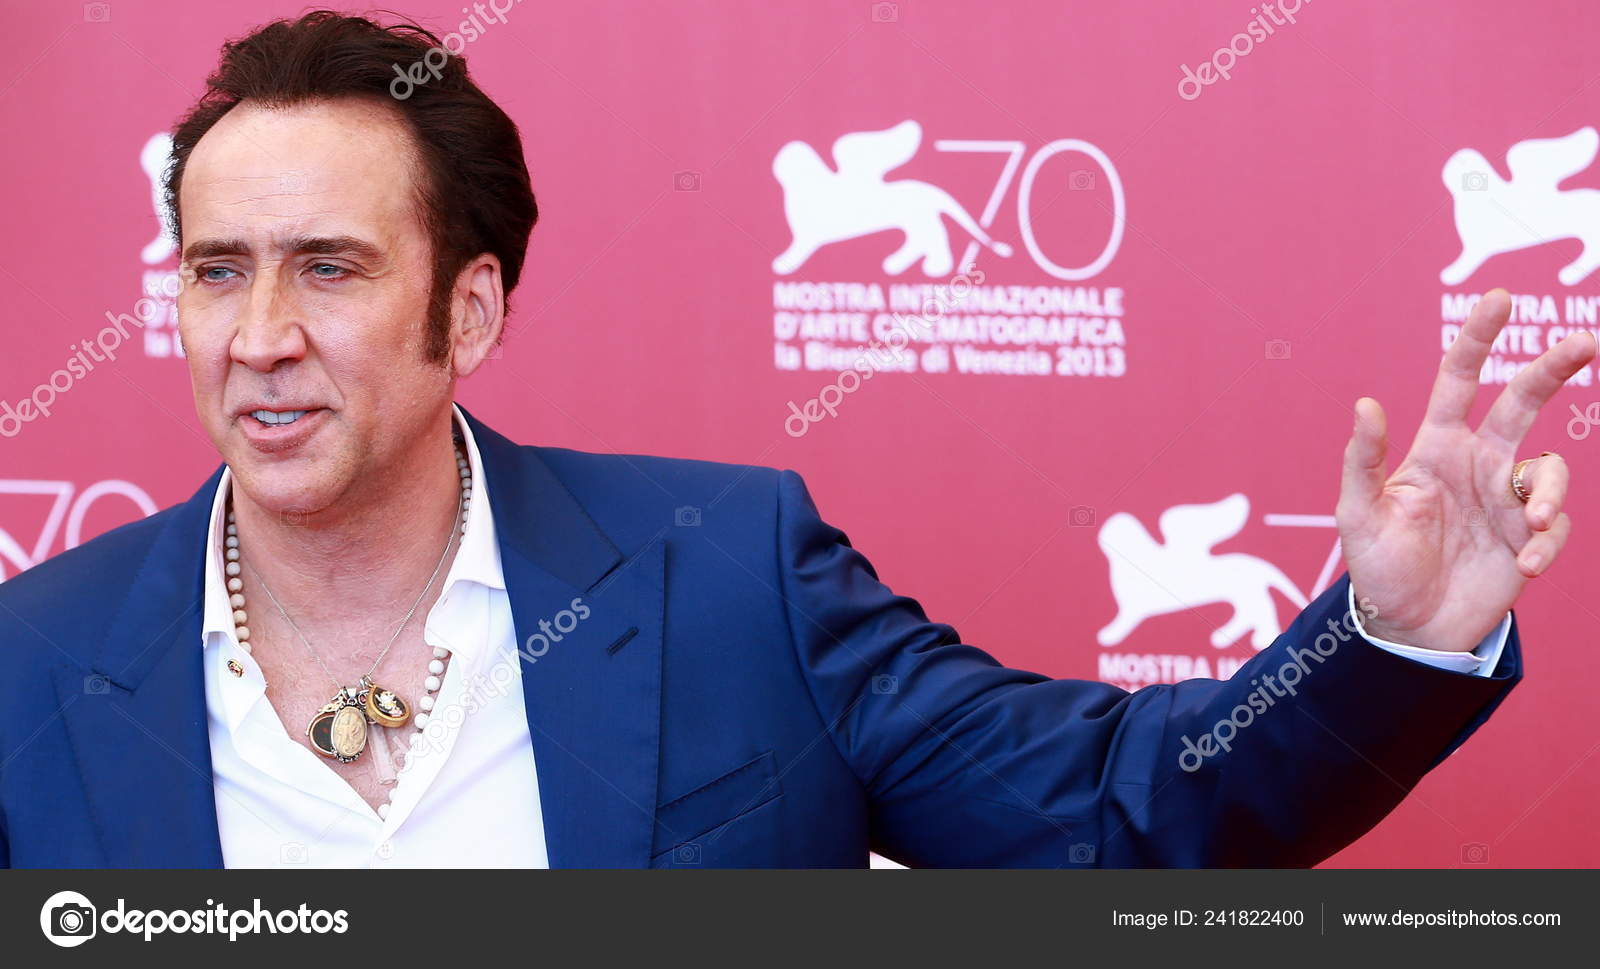 Pig Wallpaper 4K 2021 Movies Nicolas Cage 6221